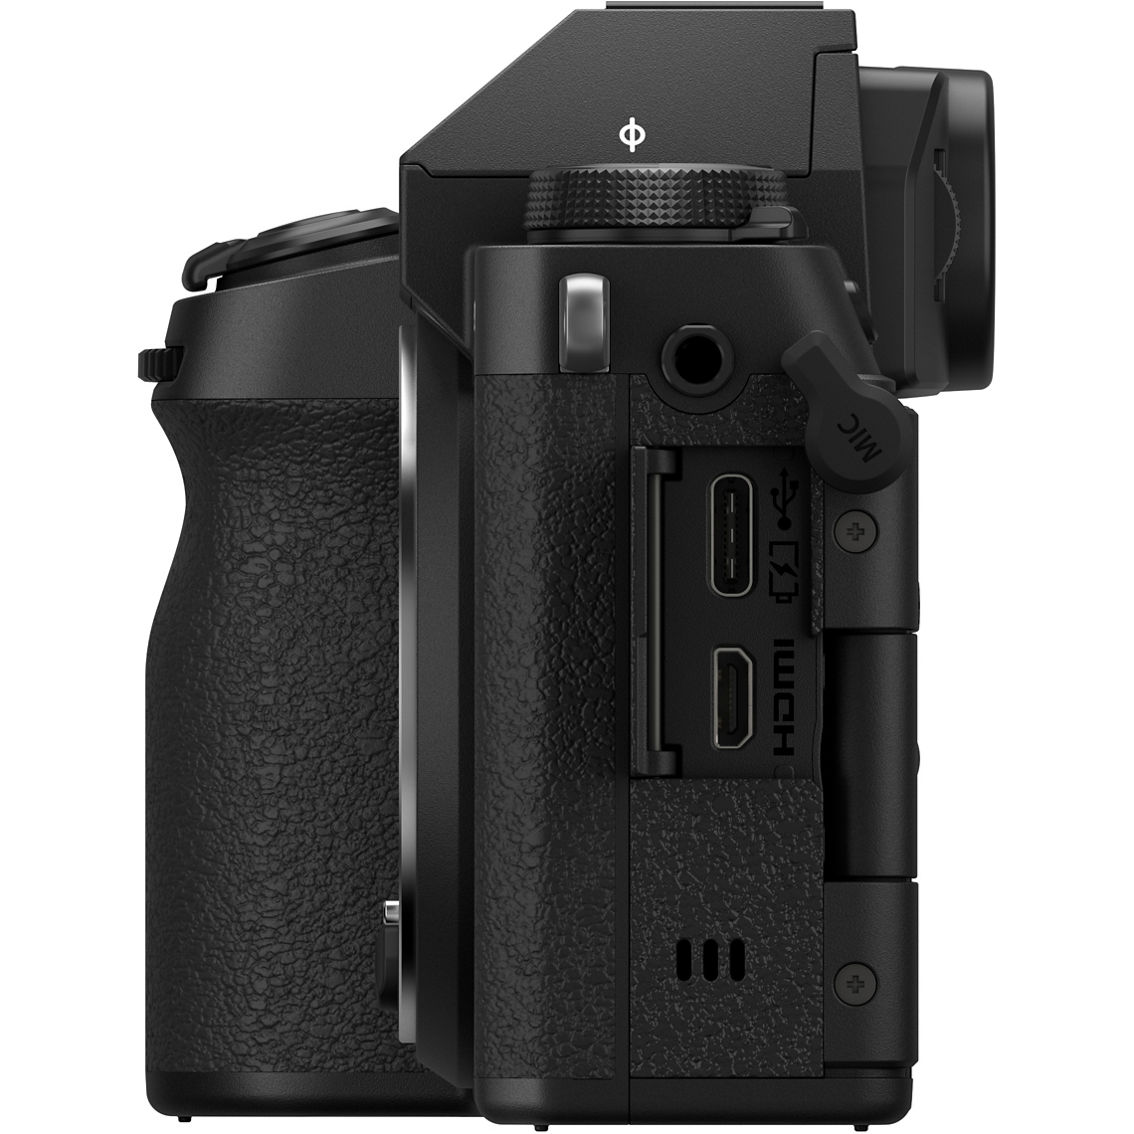 Fujifilm XS20 Mirrorless Camera Body, Black - Image 6 of 8